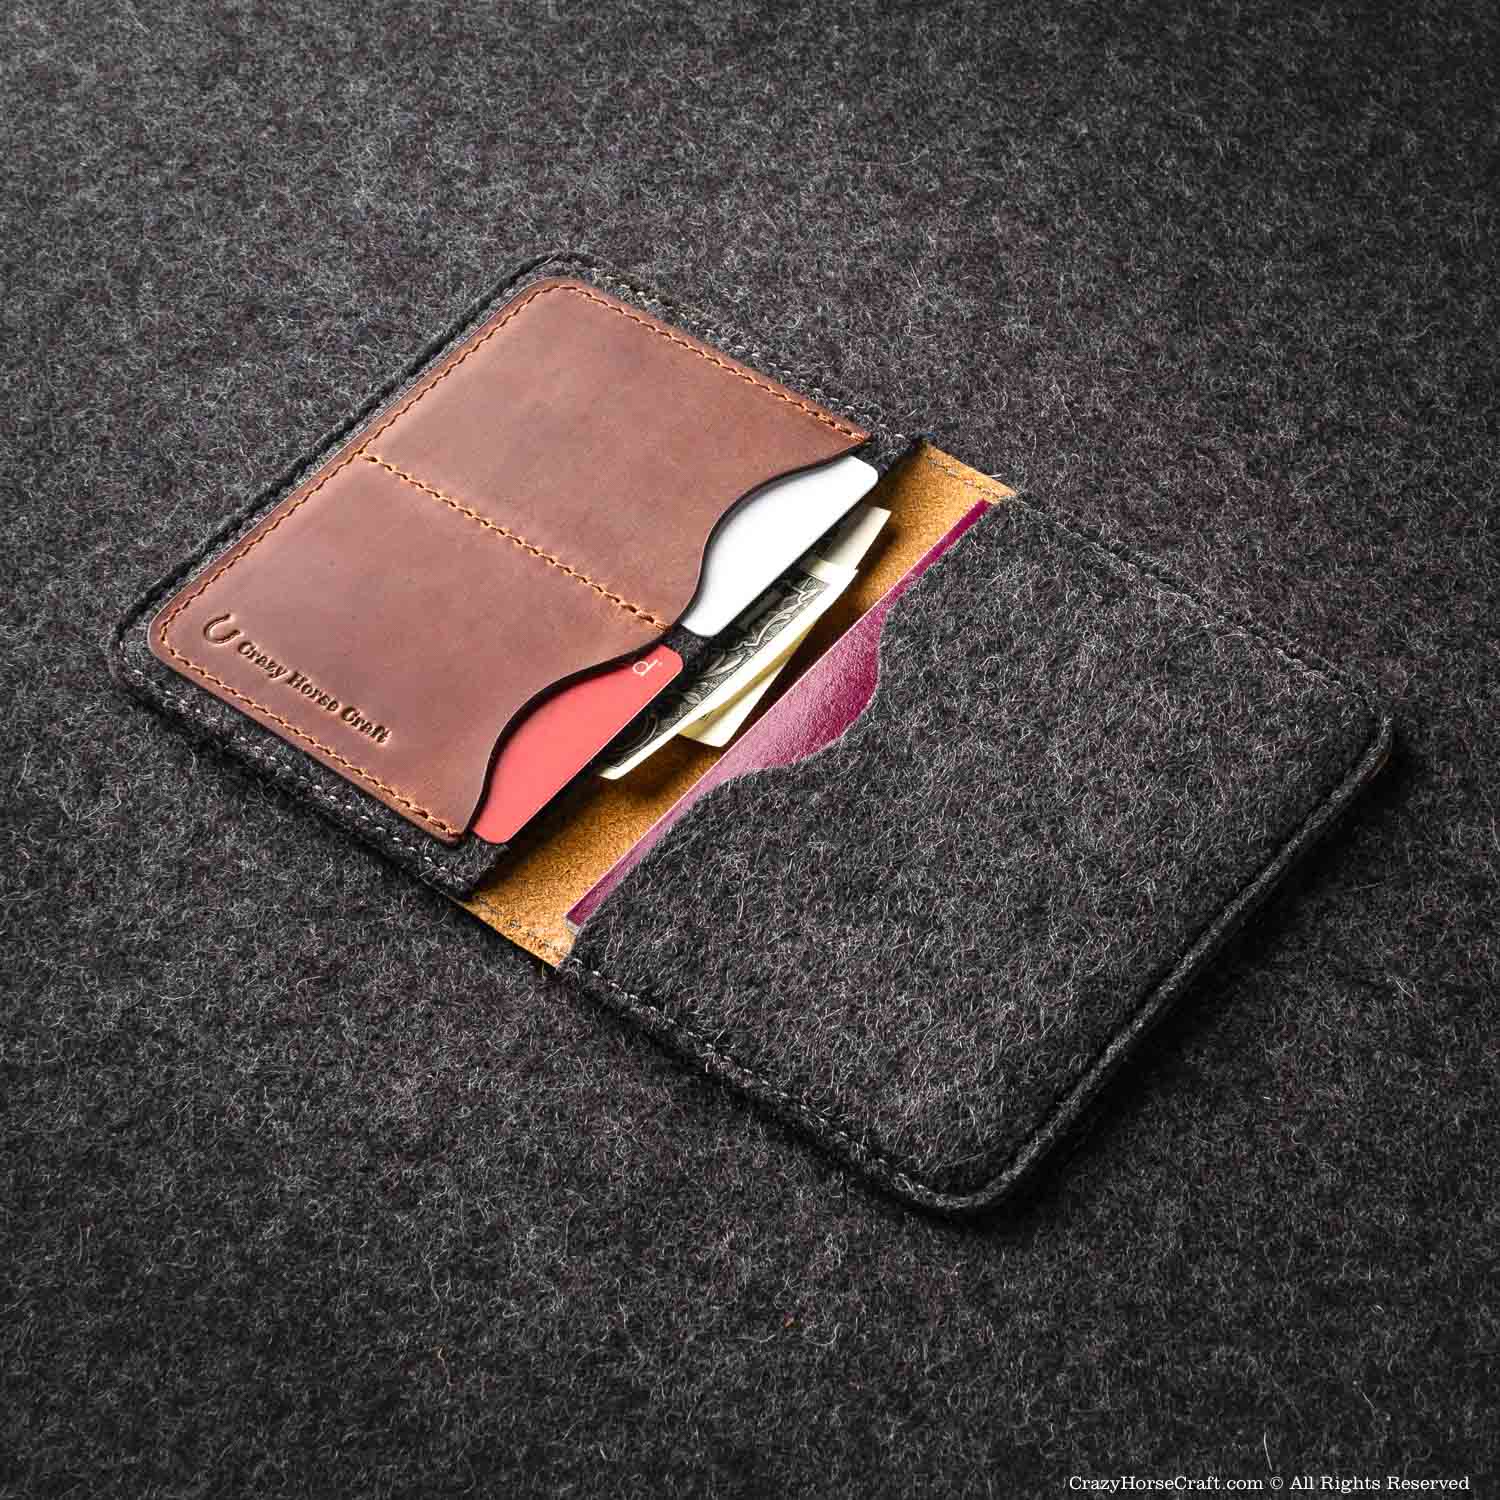  Tandy Leather Passport Wallet Kit 4052-00